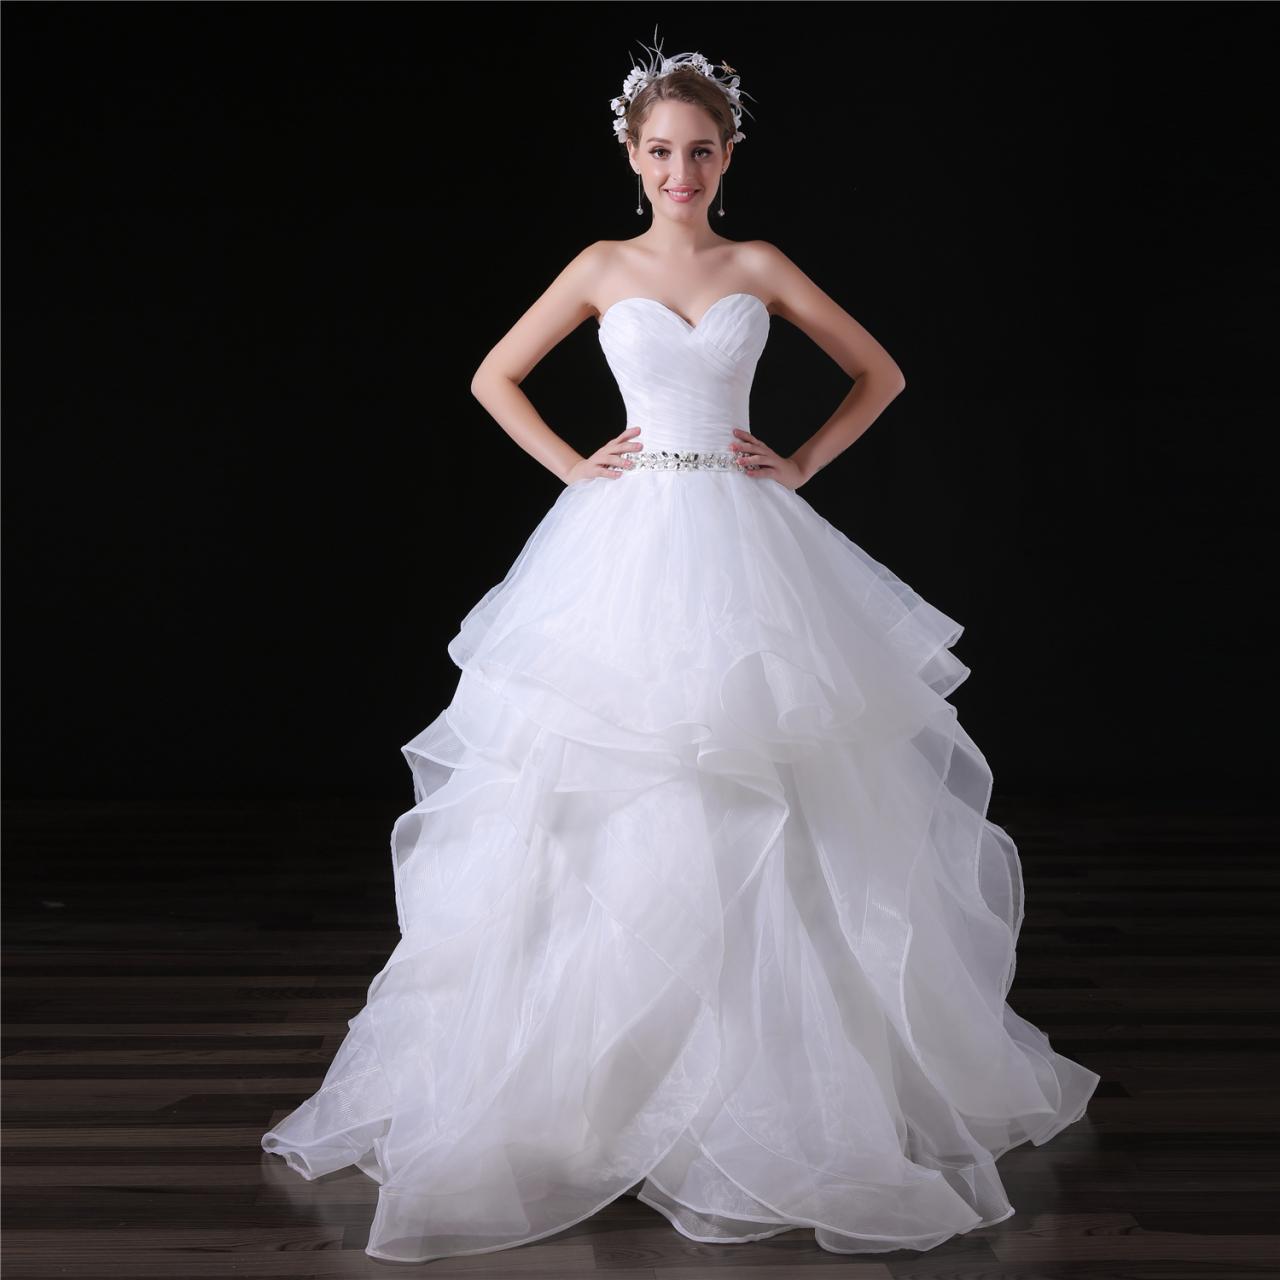 2018 White Sweetheart Ball Gown Wedding Dresses With Rhinestone Beaded Belt